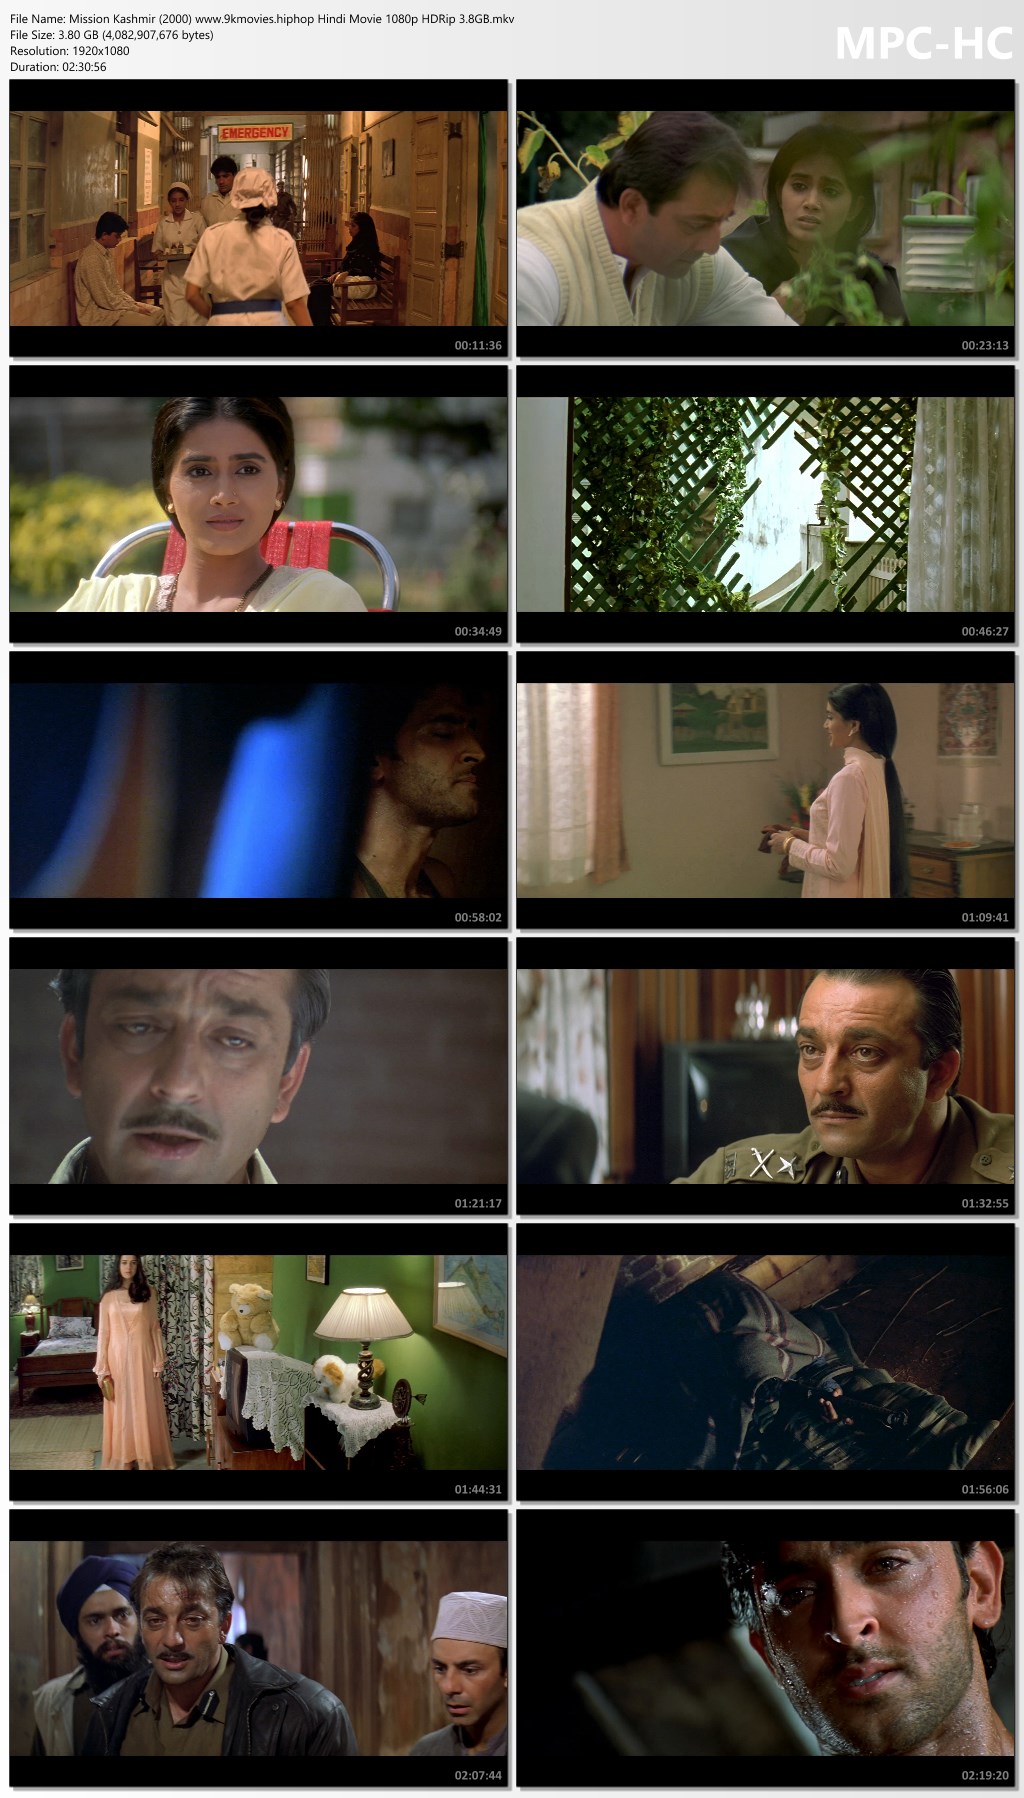 Mission Kashmir 2000 Hindi Full Movie 720p HDRip 1.3GB - 1kMovies